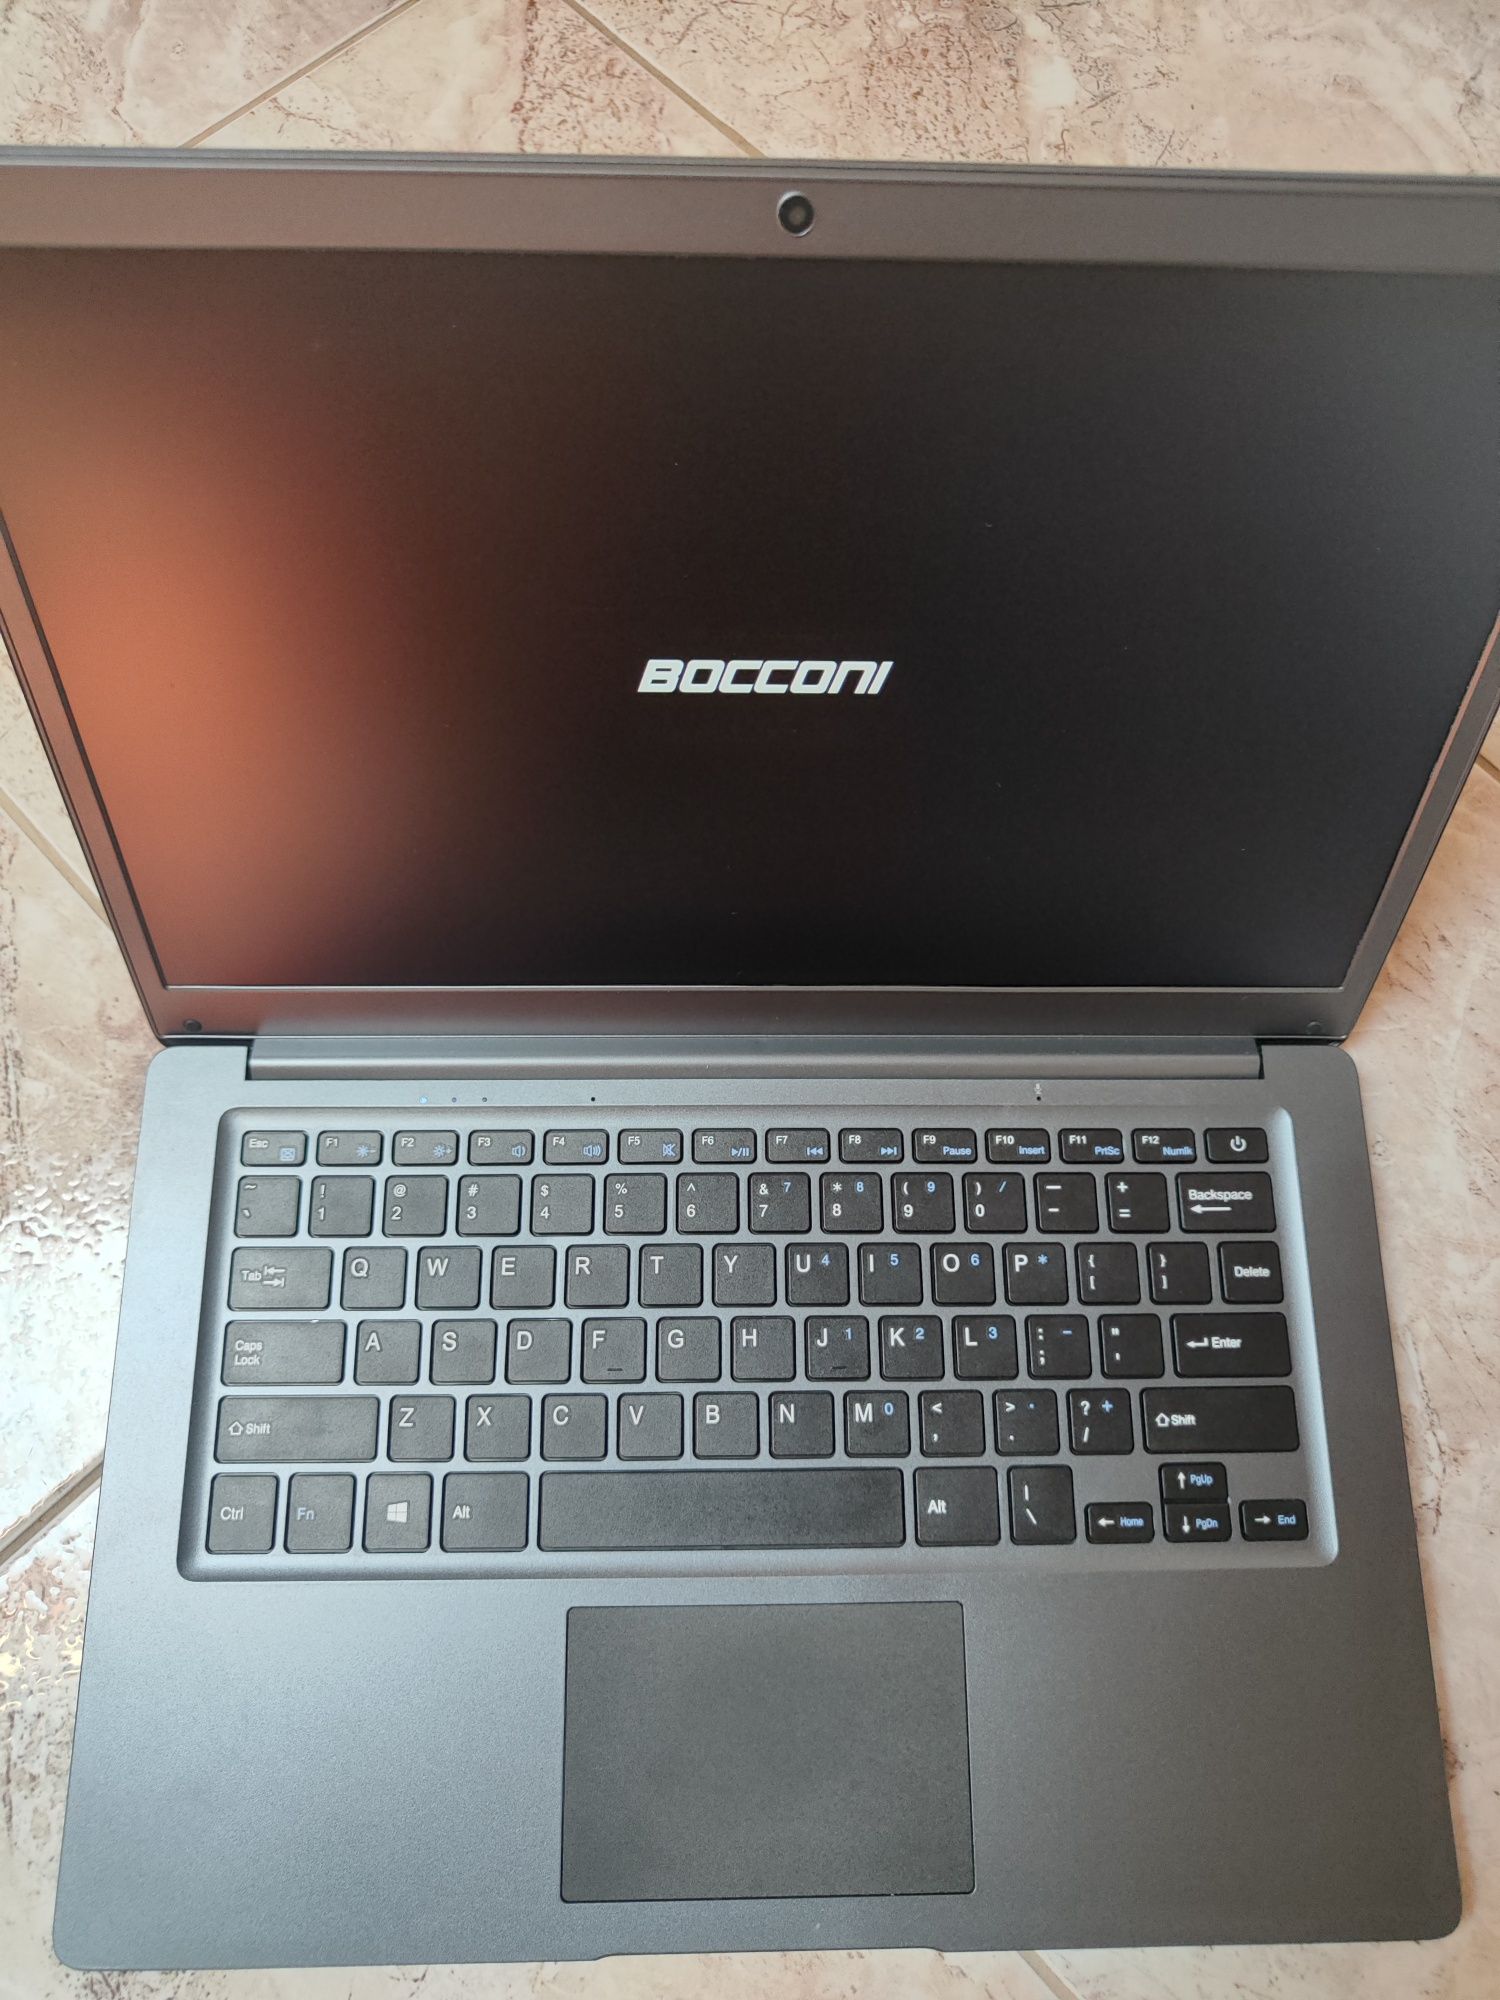 Laptop Leadbook Bocconi 14.1 inch